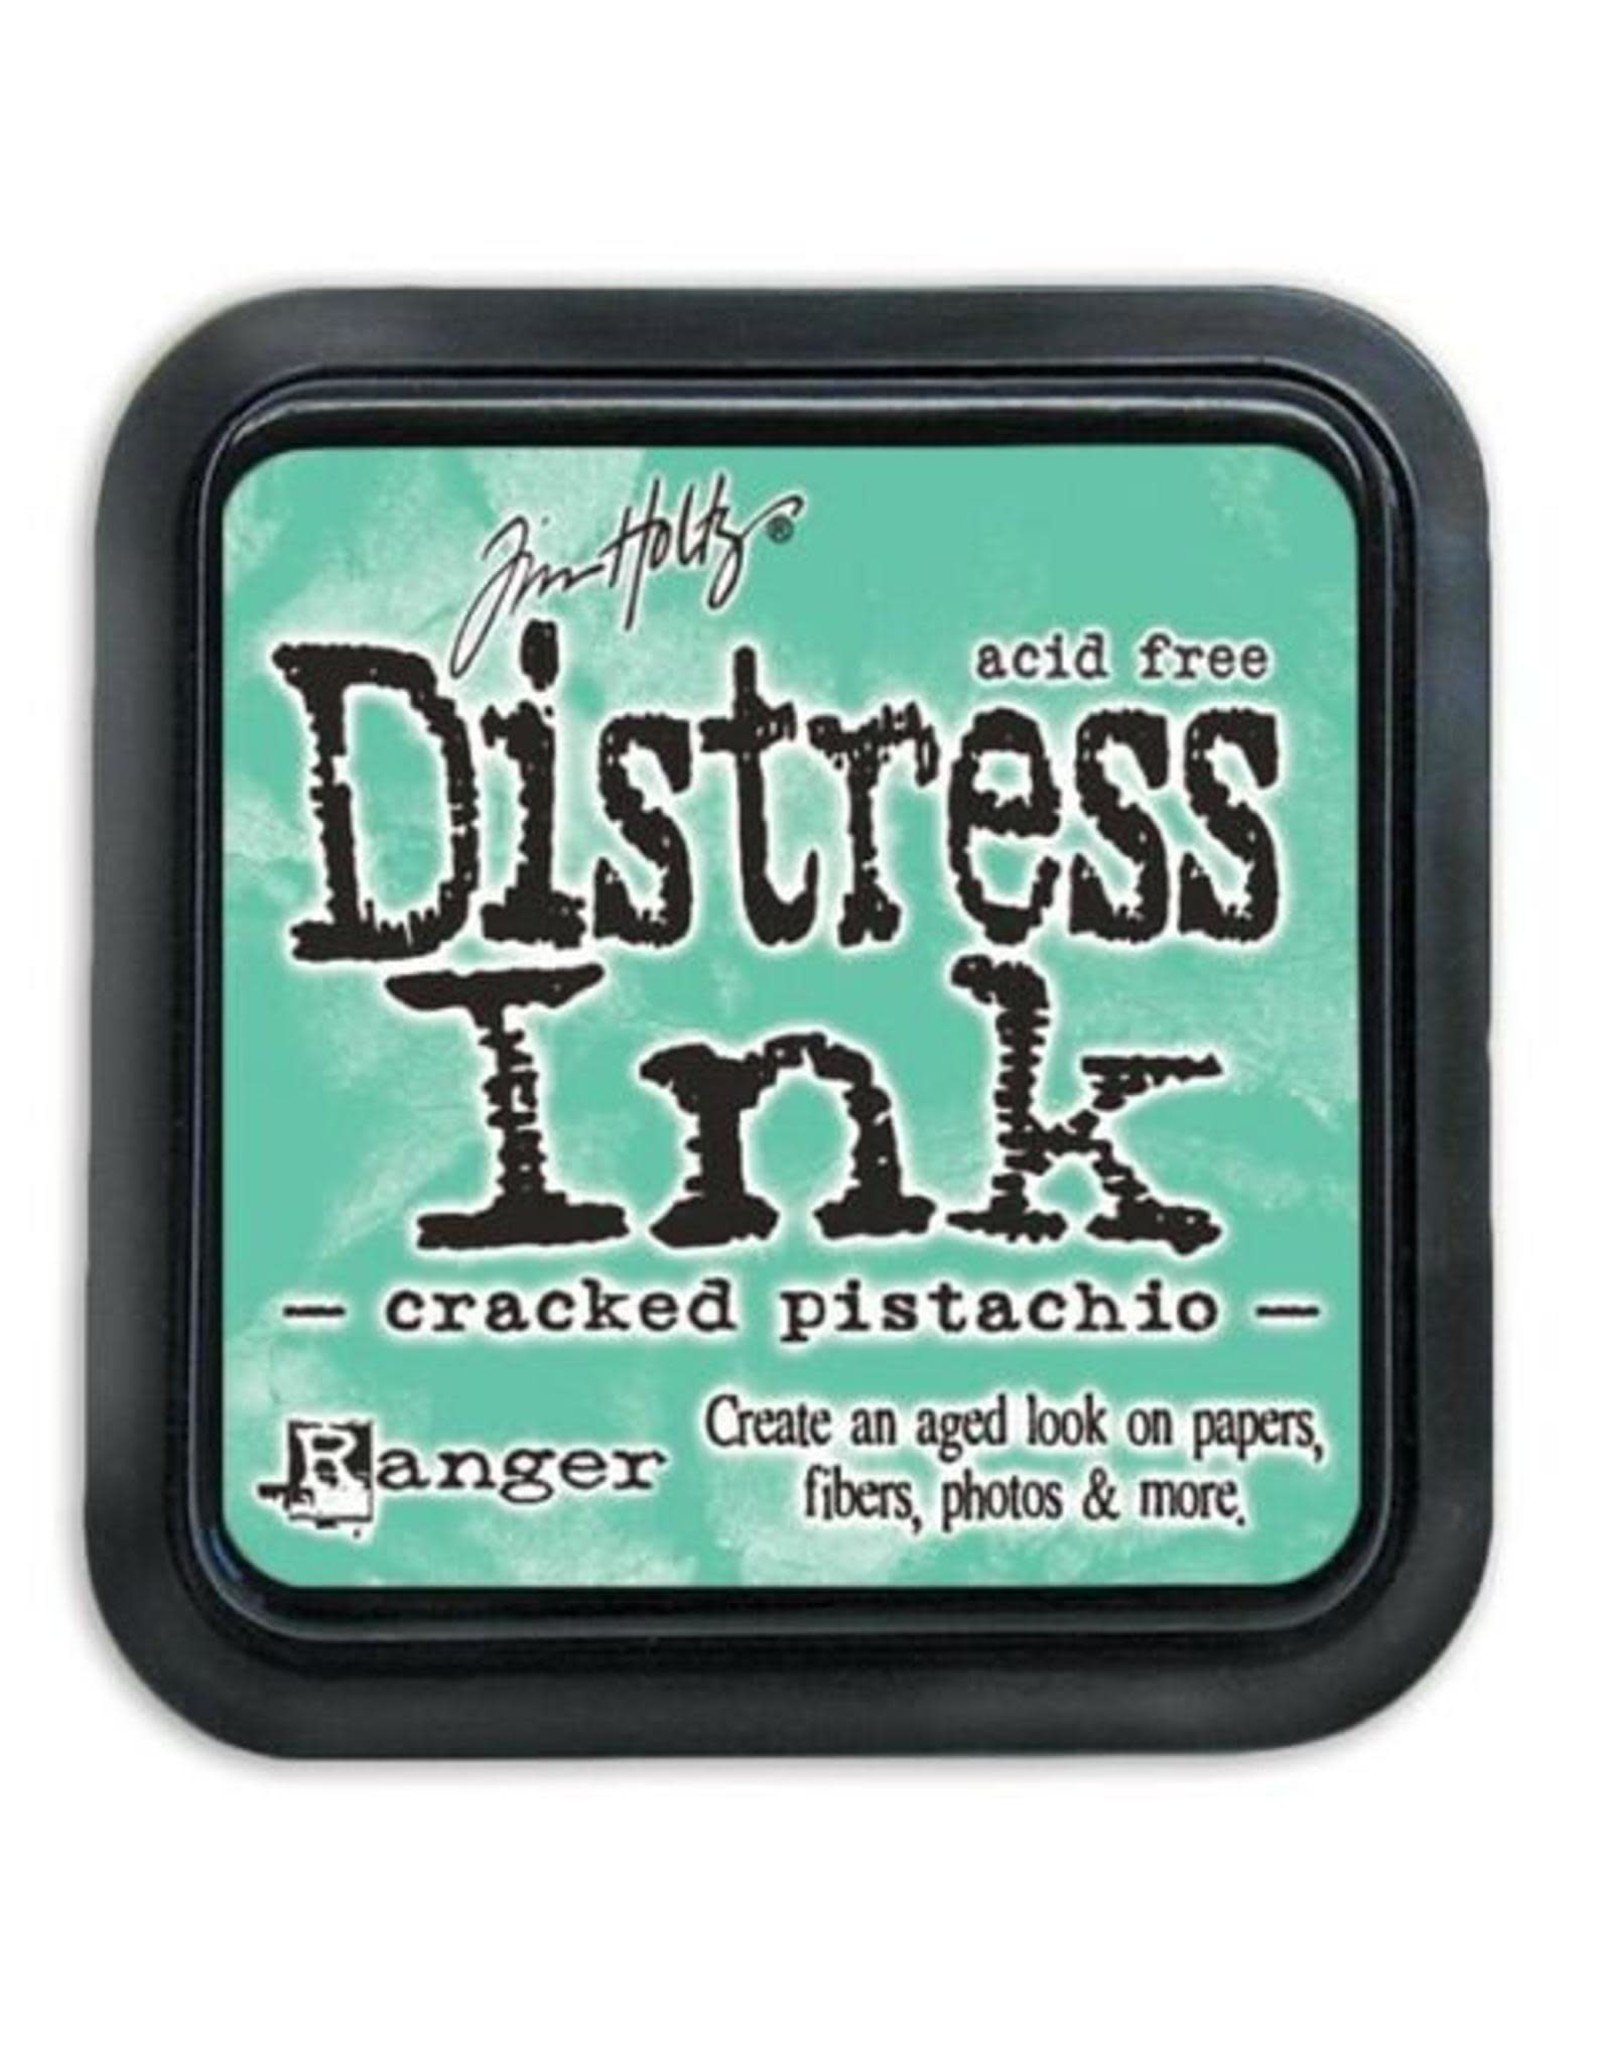 Tim Holtz - Ranger Distress Ink Cracked Pistachio